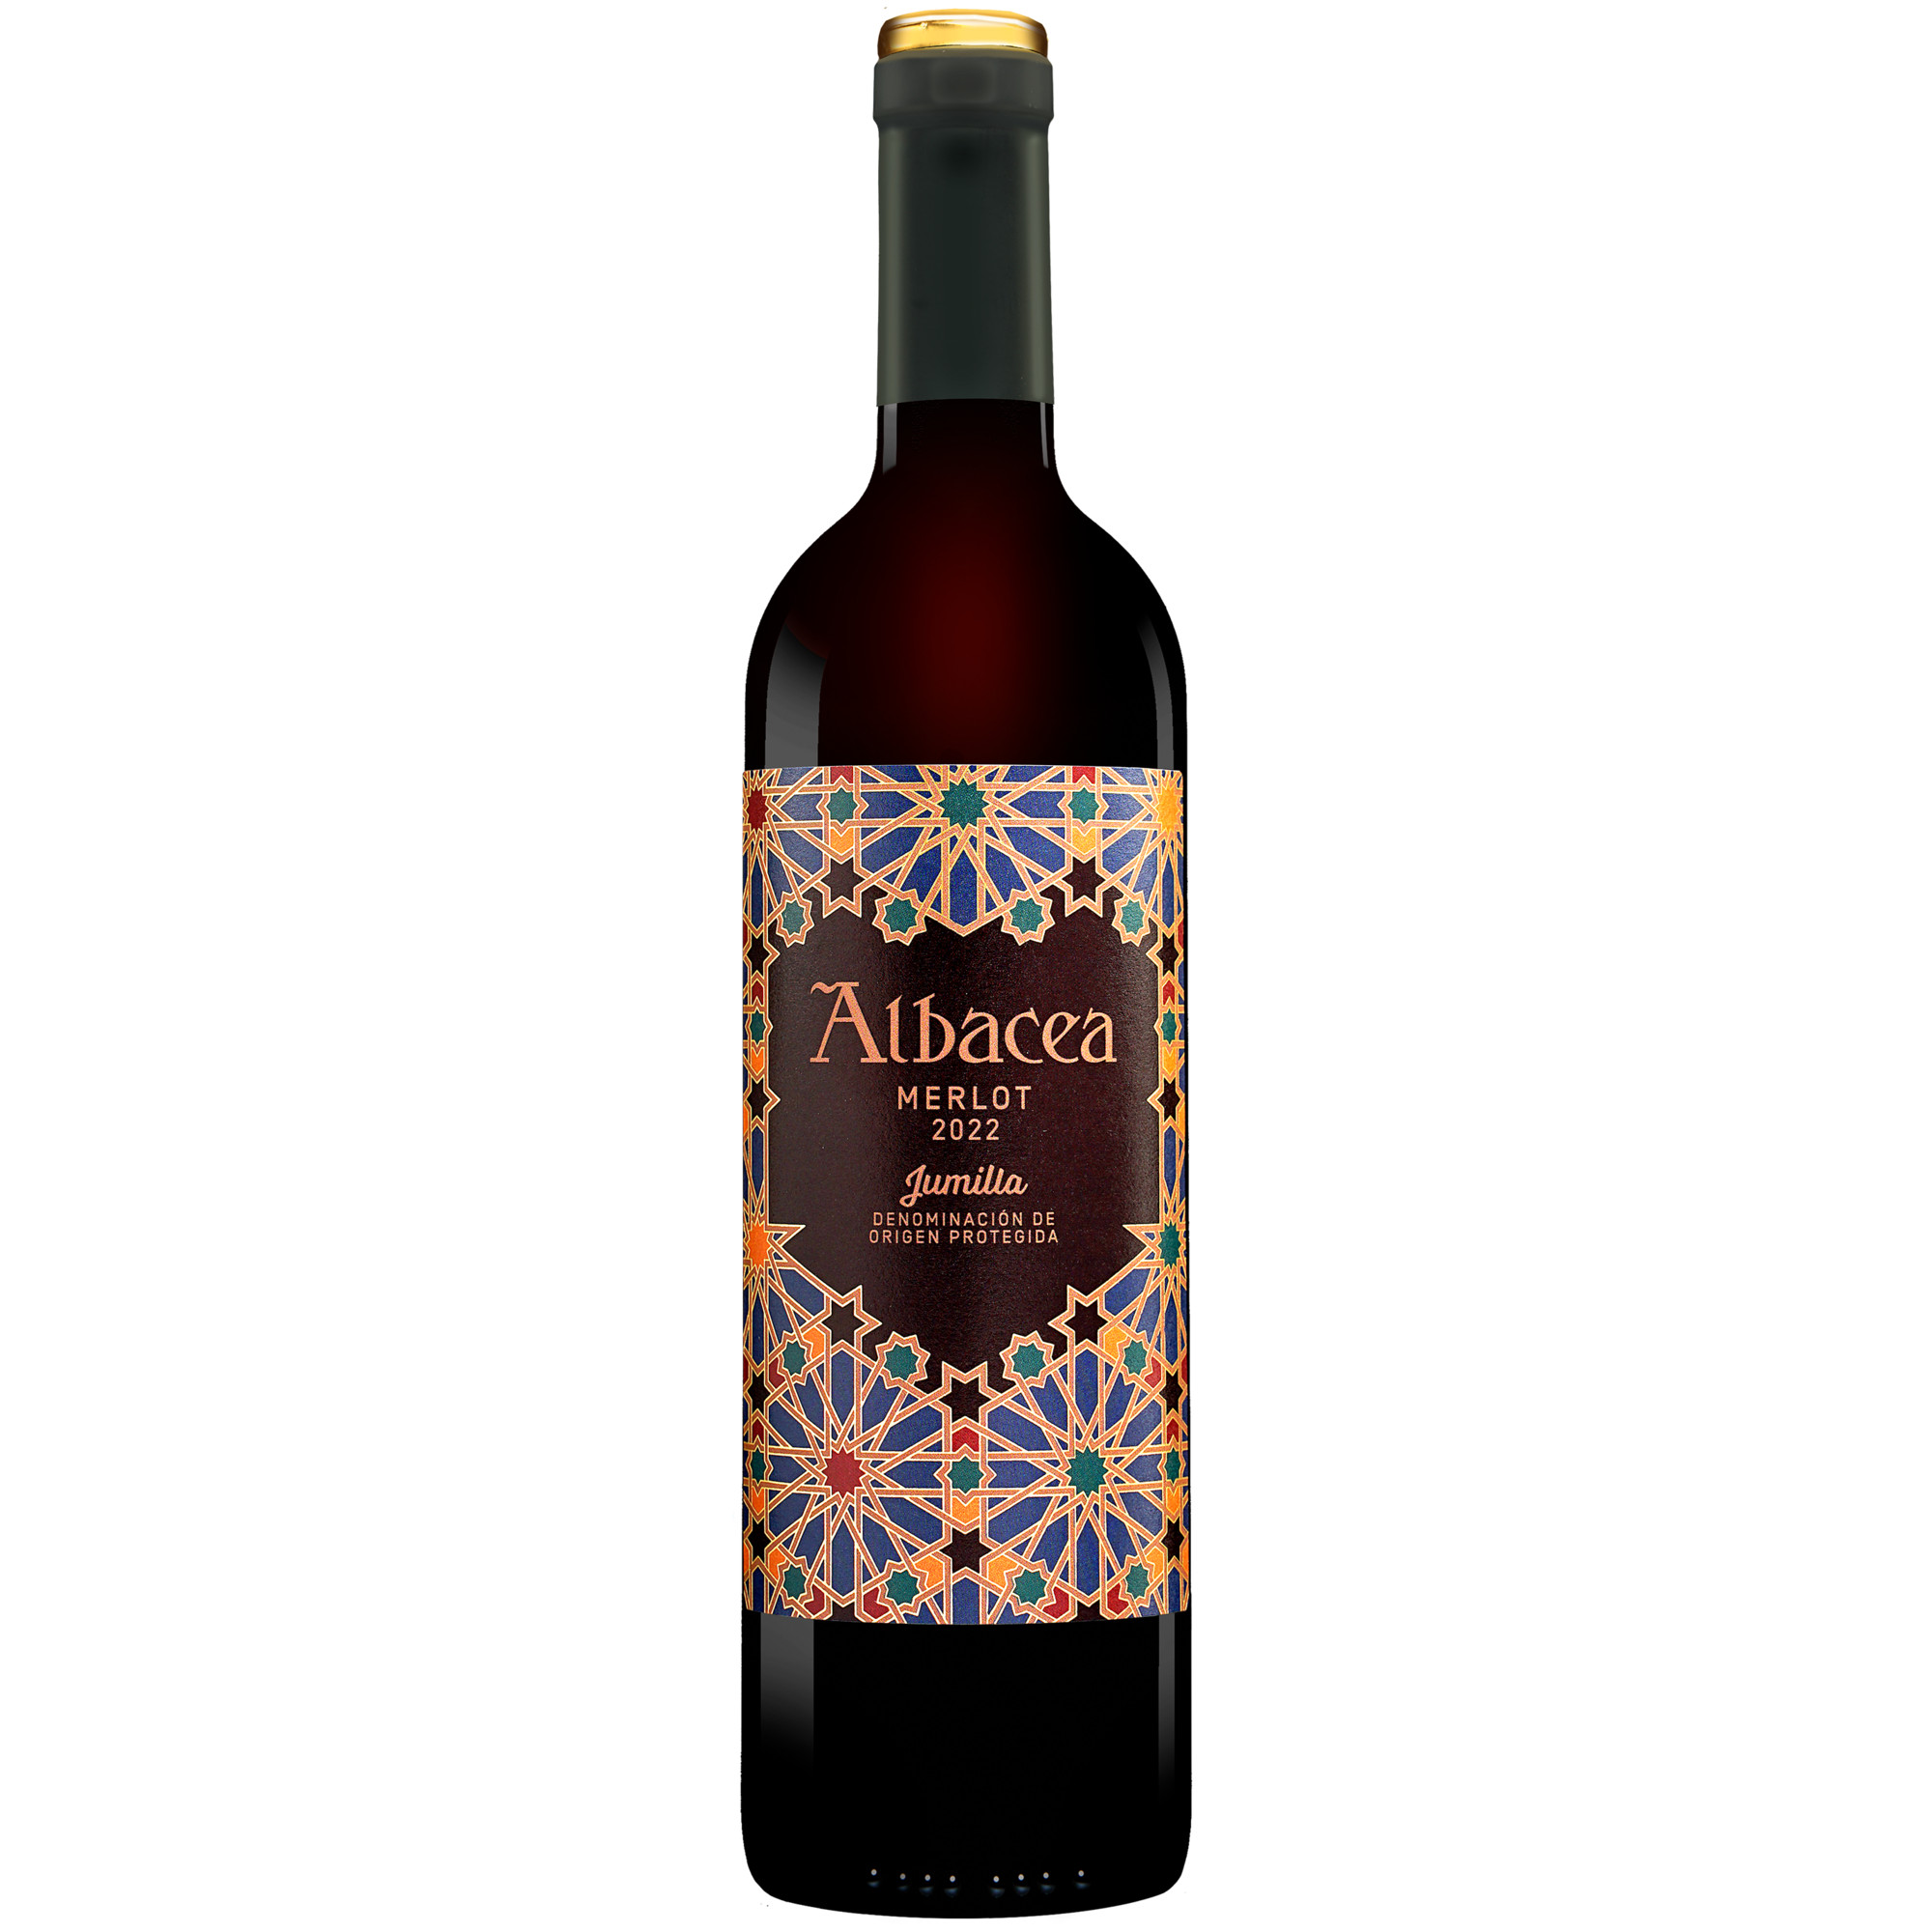 Albacea Merlot 2022  014.5% Vol. Rotwein Trocken aus Spanien